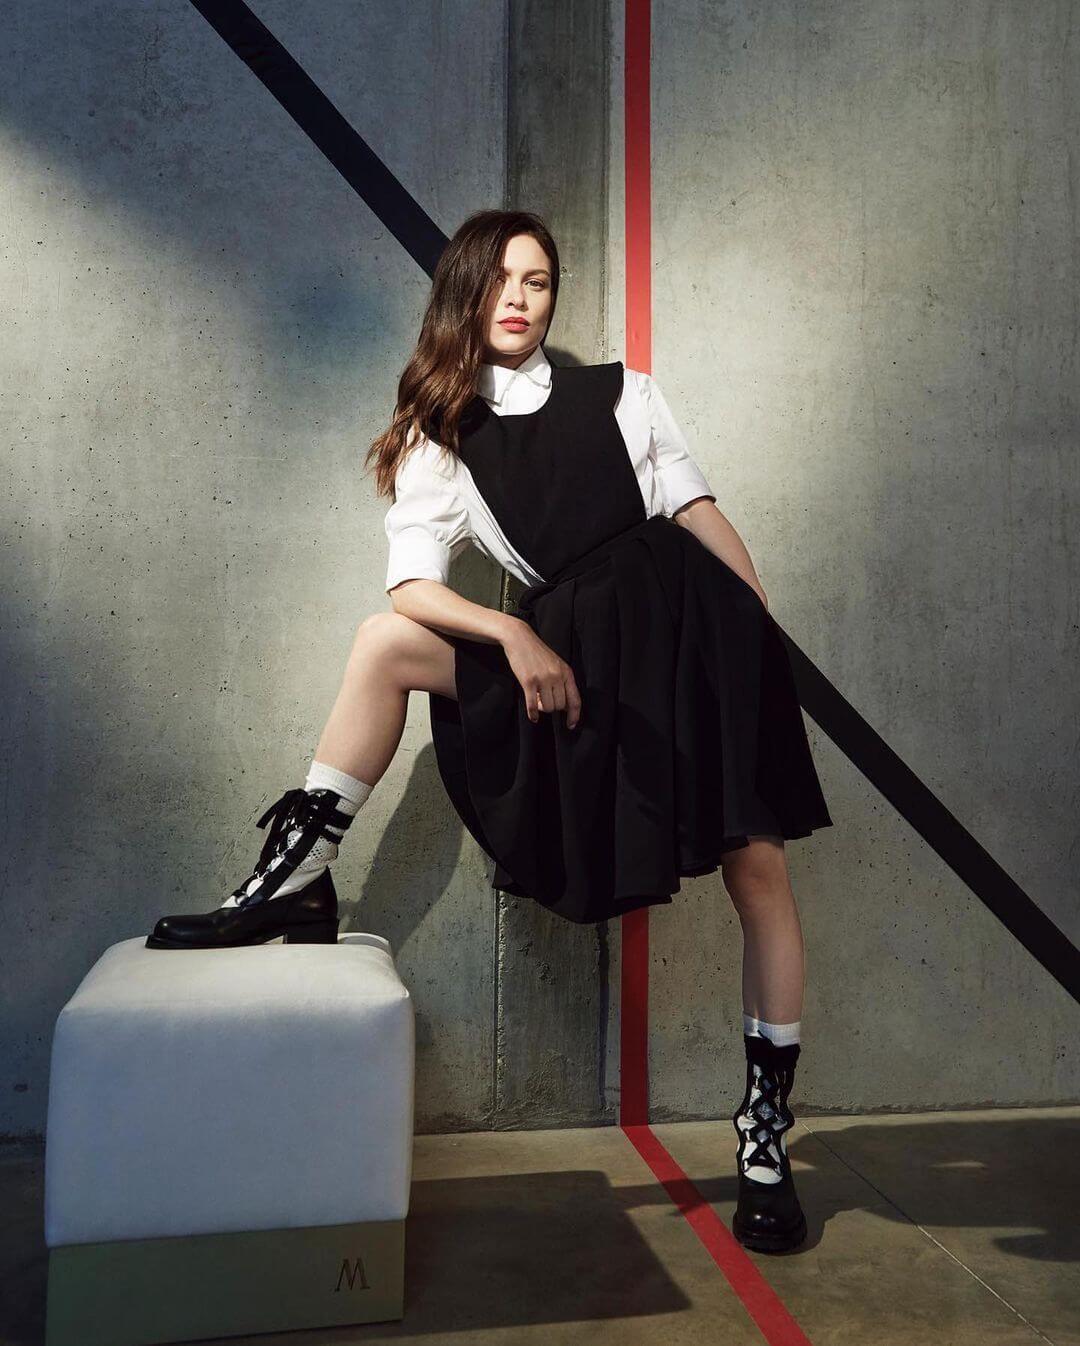 Elegant Style: Sophie Cookson's White Shirt and Black Skirt Look